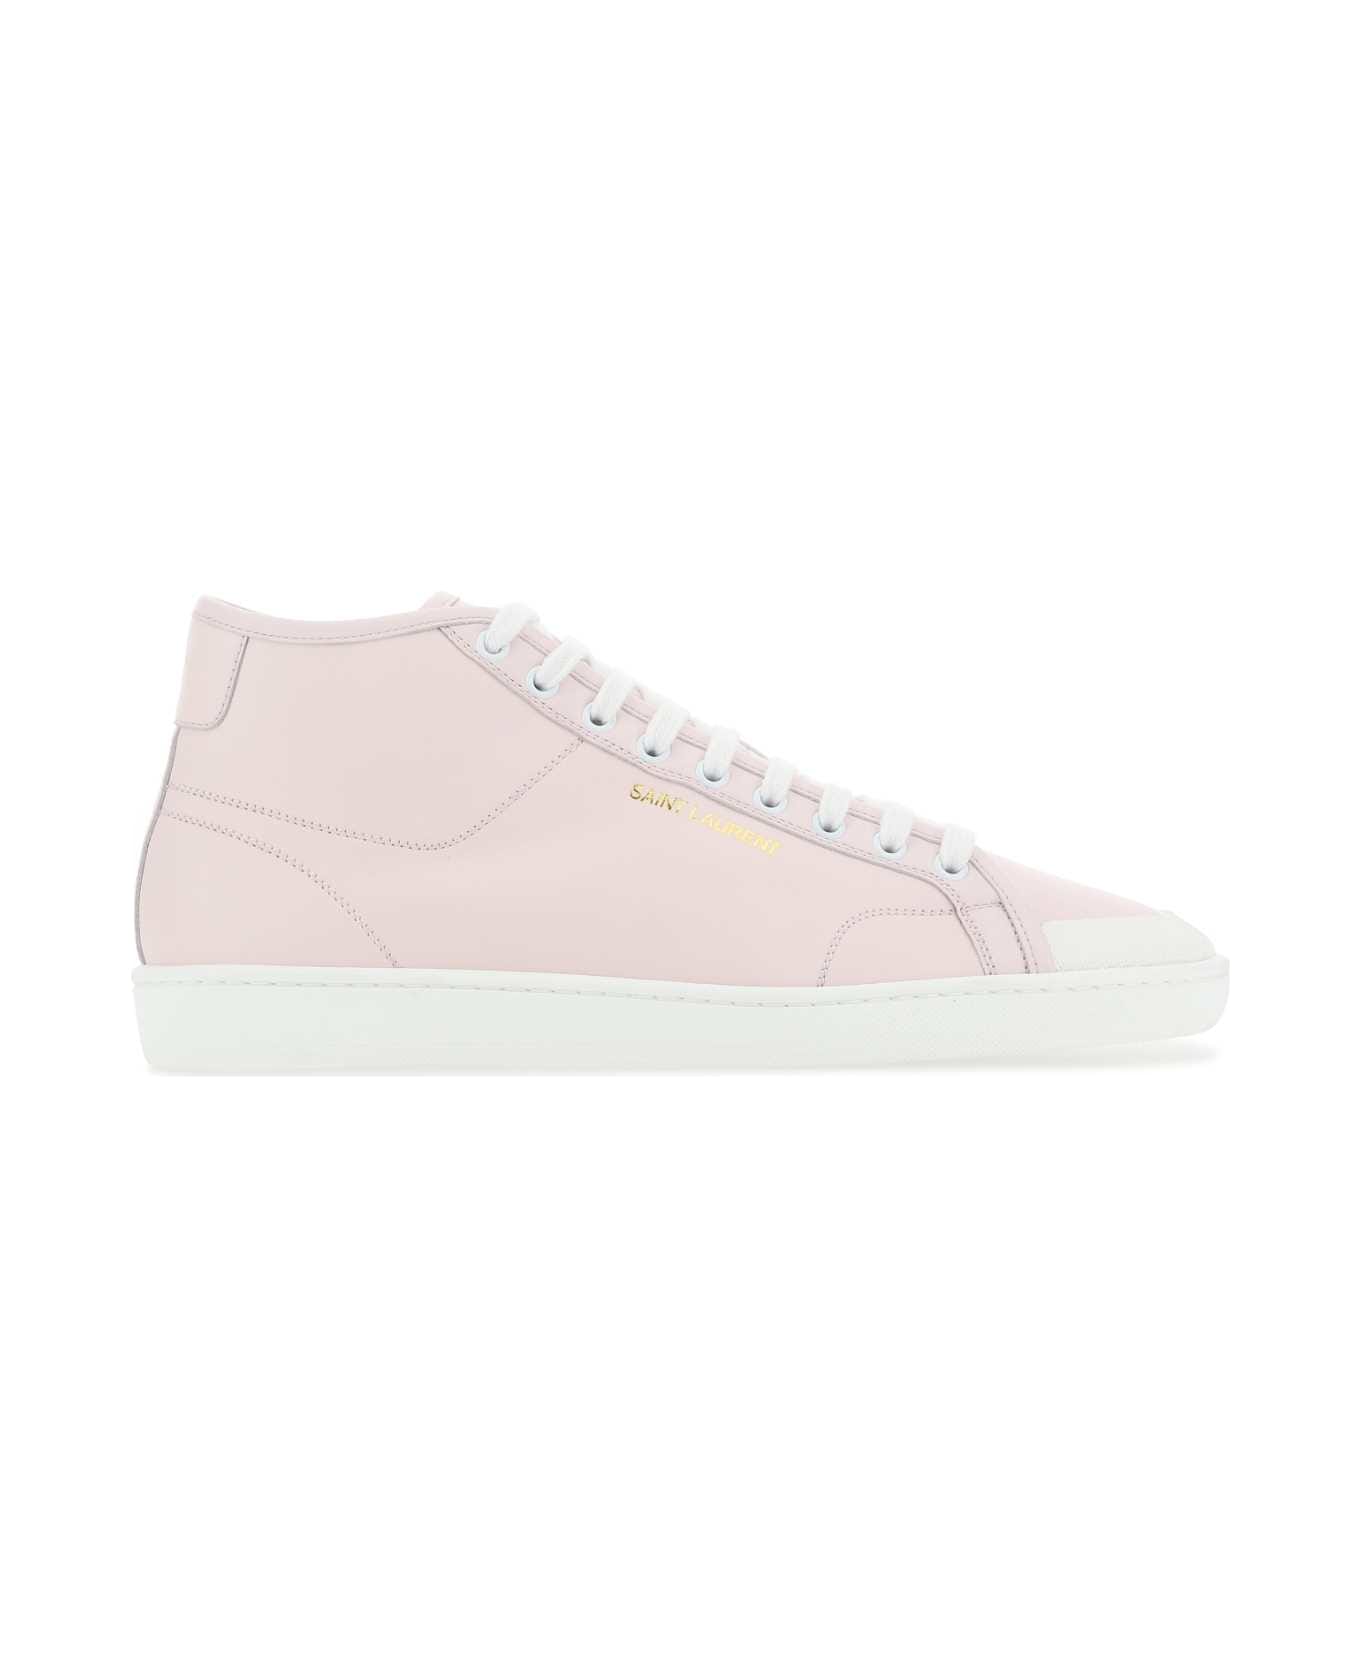 Saint Laurent Pastel Pink Leather Court Classic Sneakers - 5915